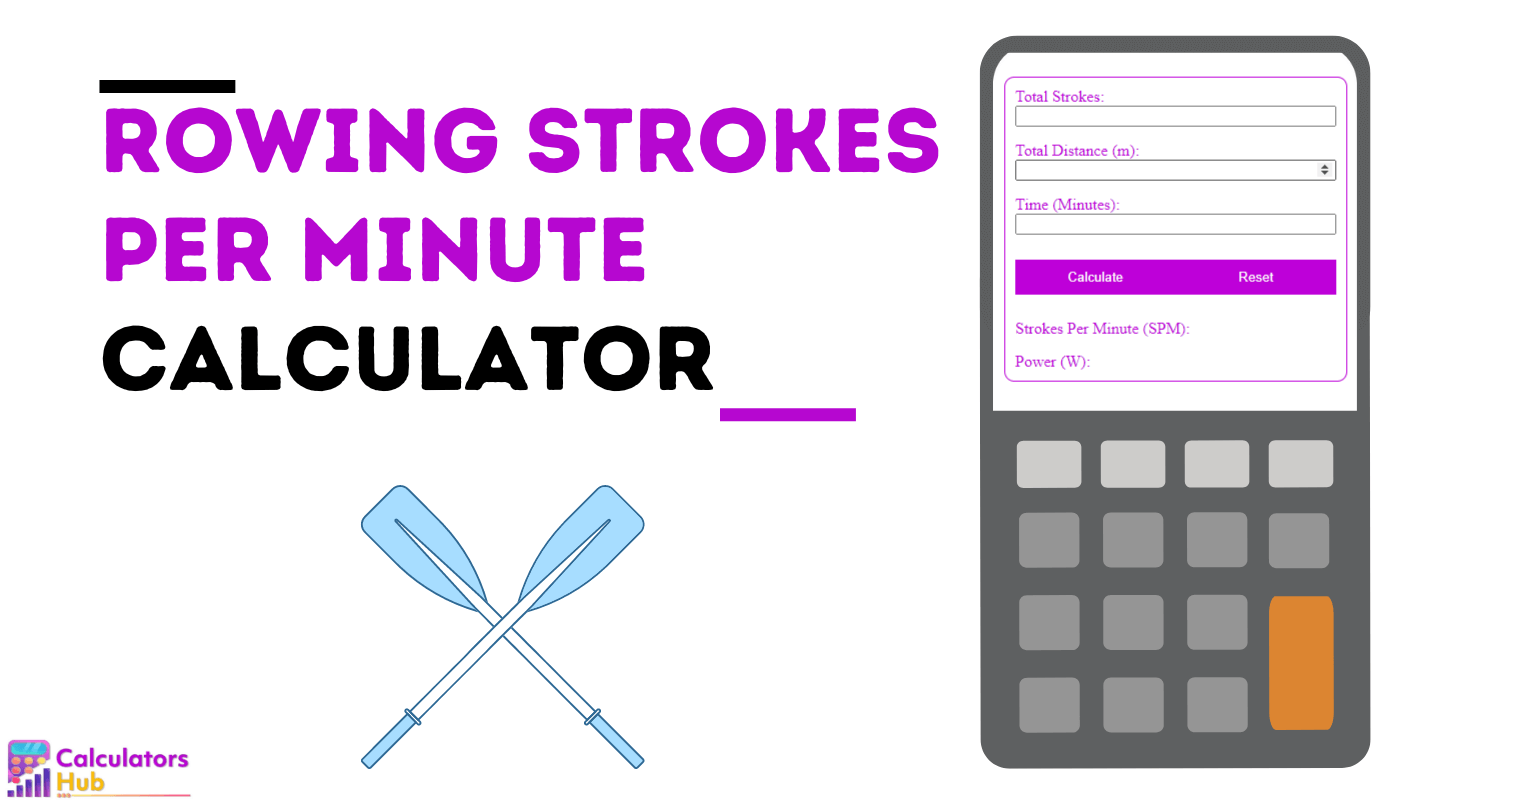 Rowing Strokes Per Minute Calculator